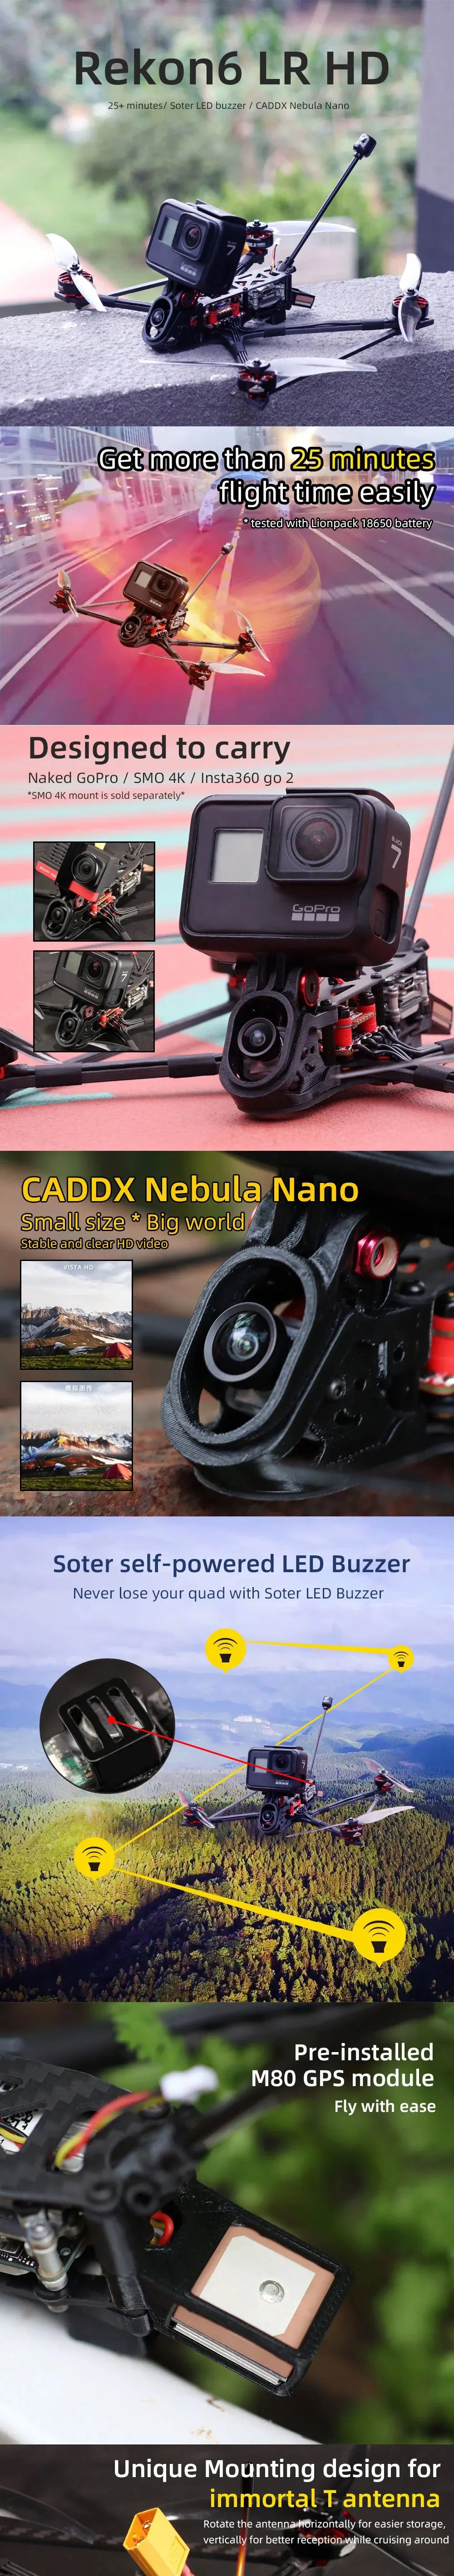 HGLRC Rekon 6 HD, Soter LED buzzer CADDX Nebula Nano Getuorethan 25+